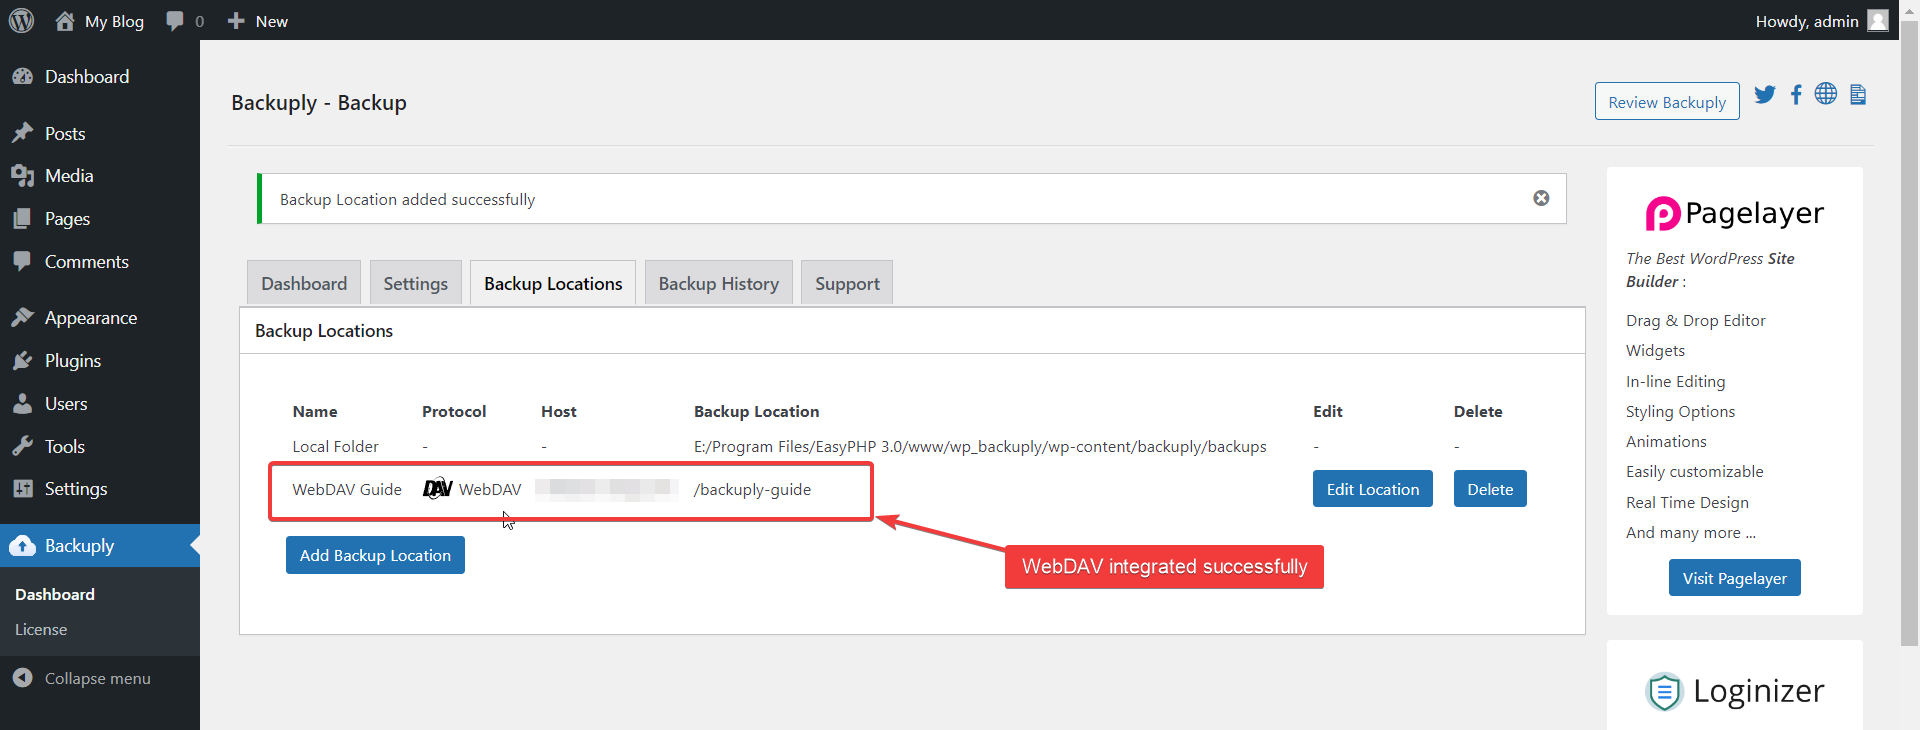 WebDAV added successfully